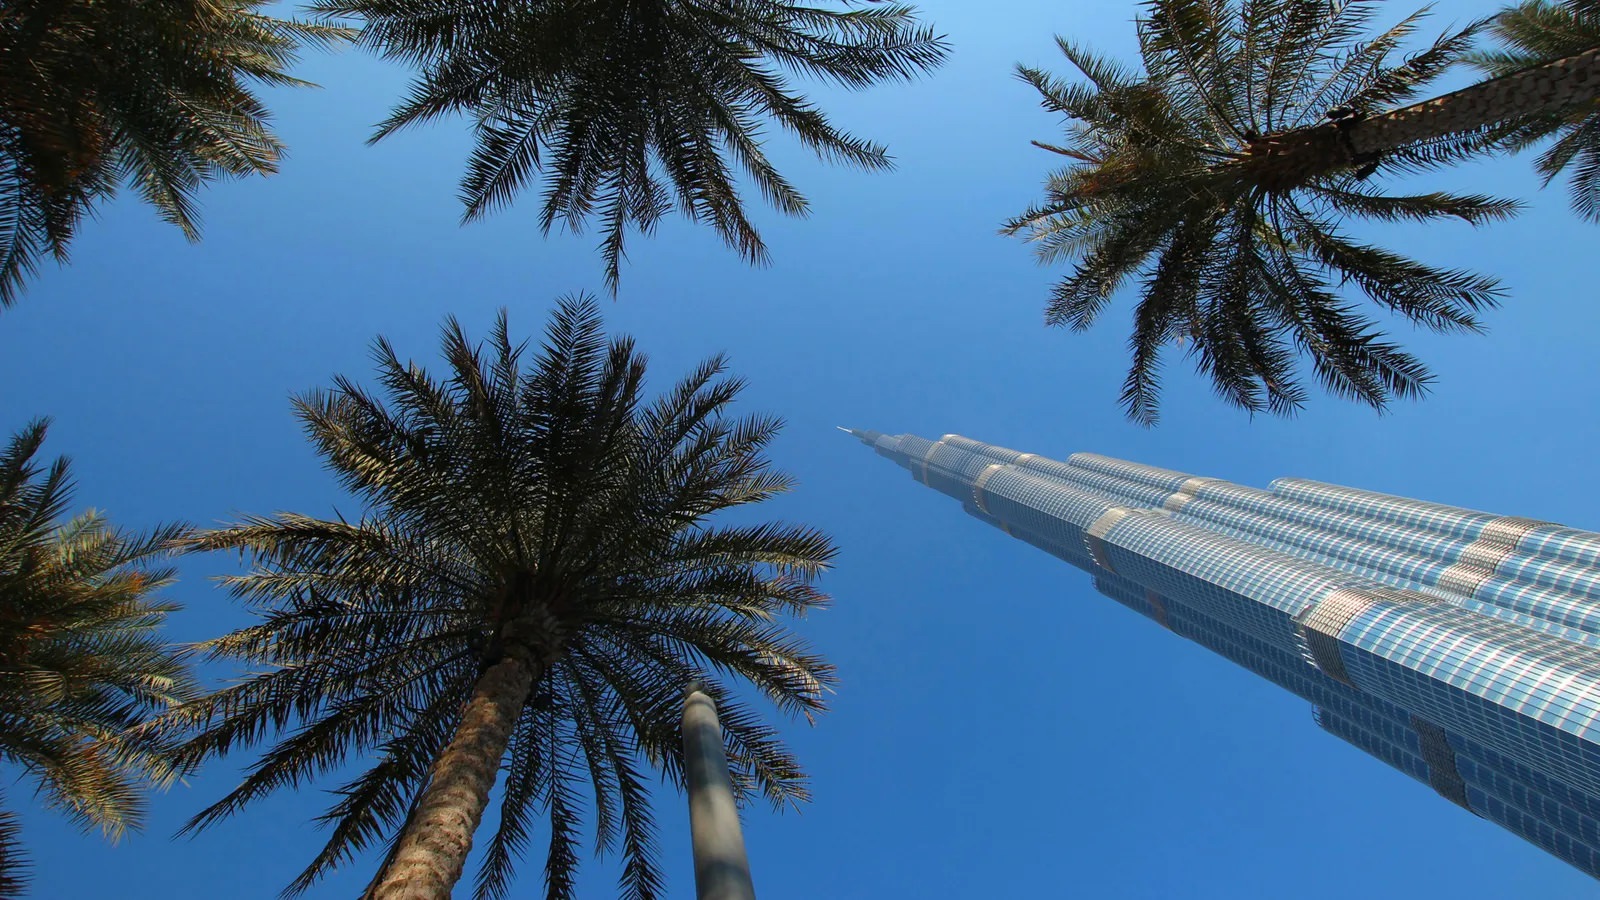 Burj Khalifa Dubai and palm trees